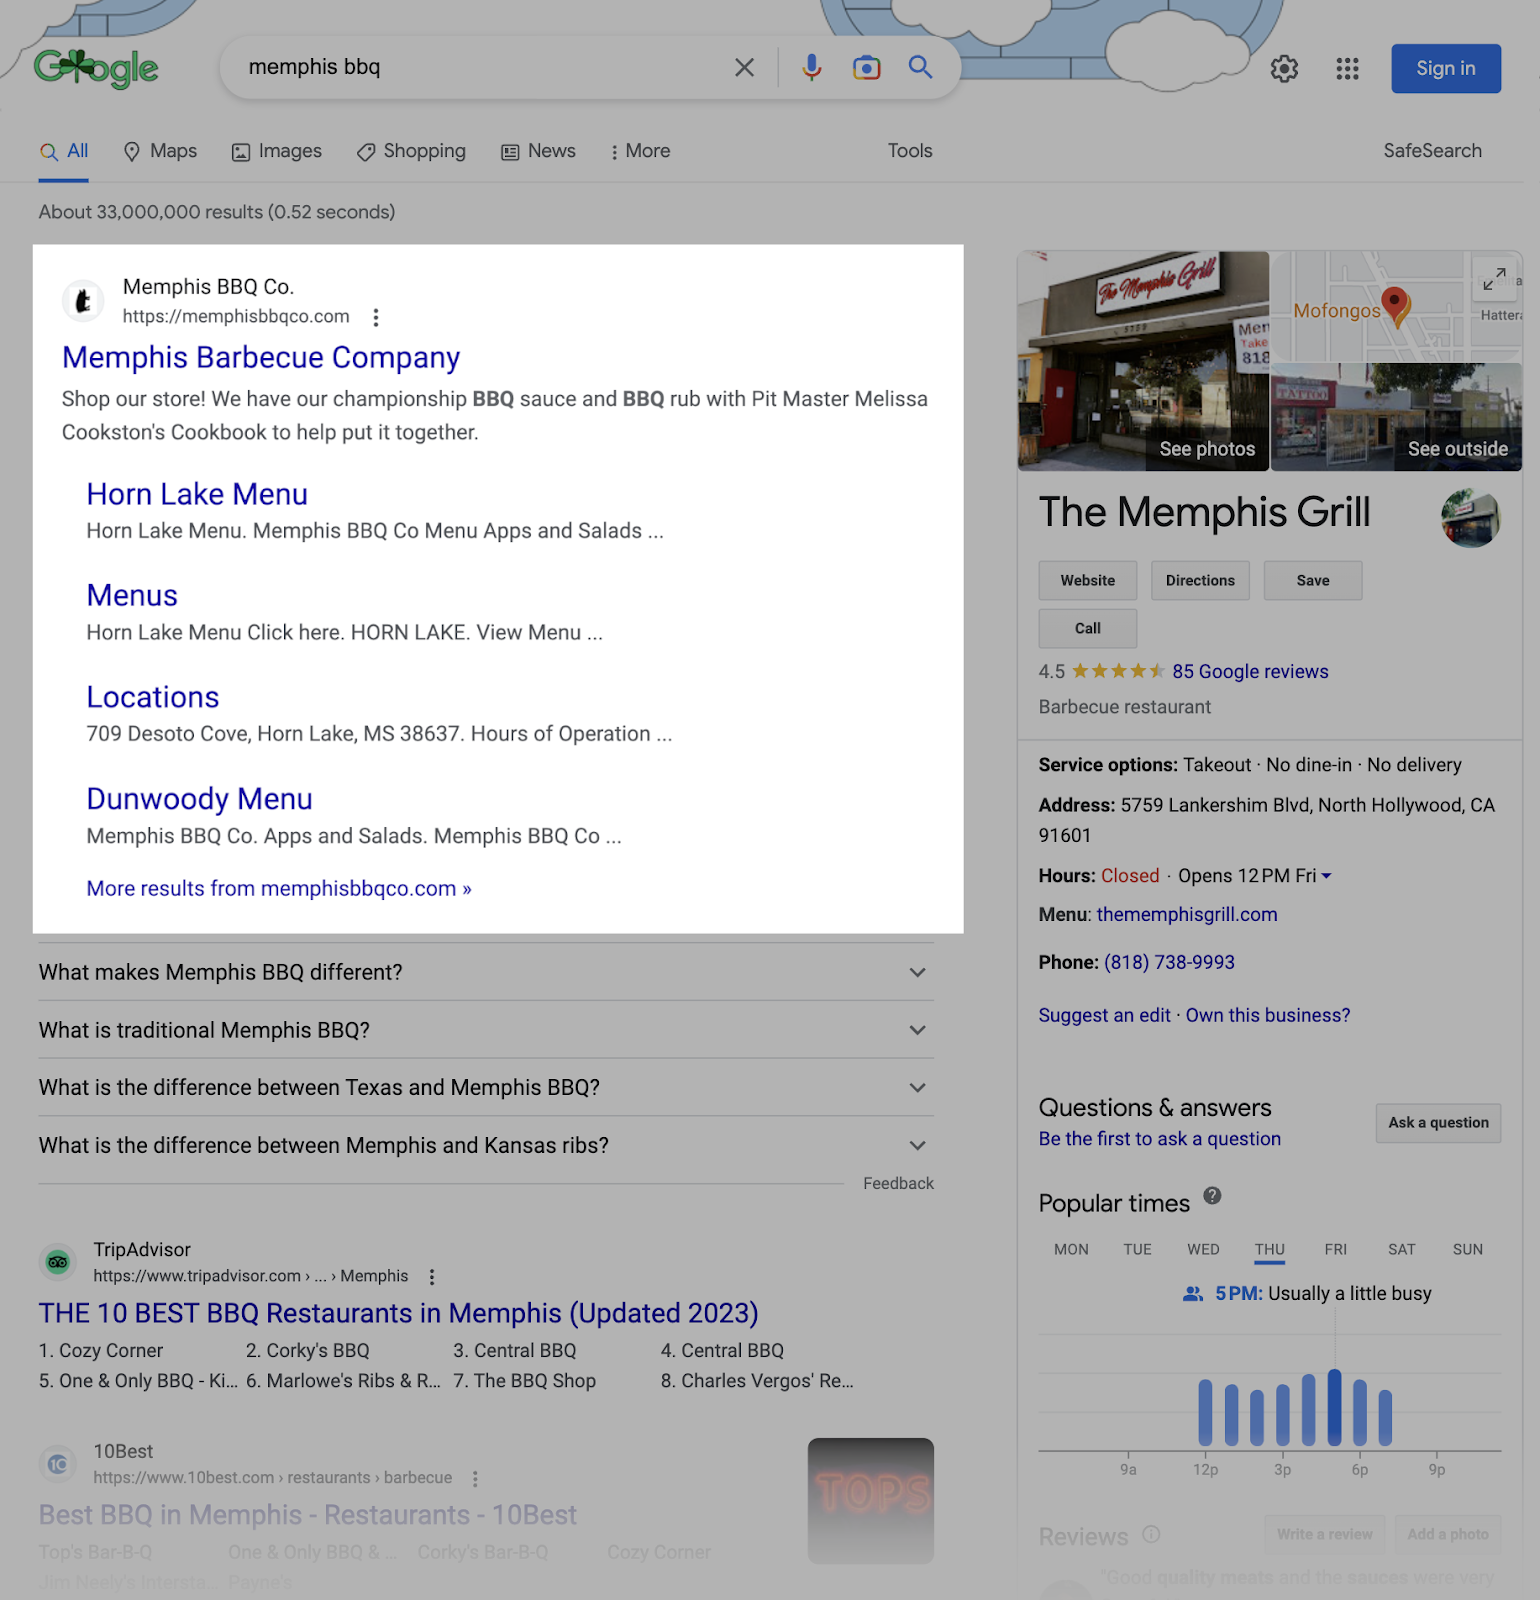 Memphis Barbecue Company’s website in Google SERP